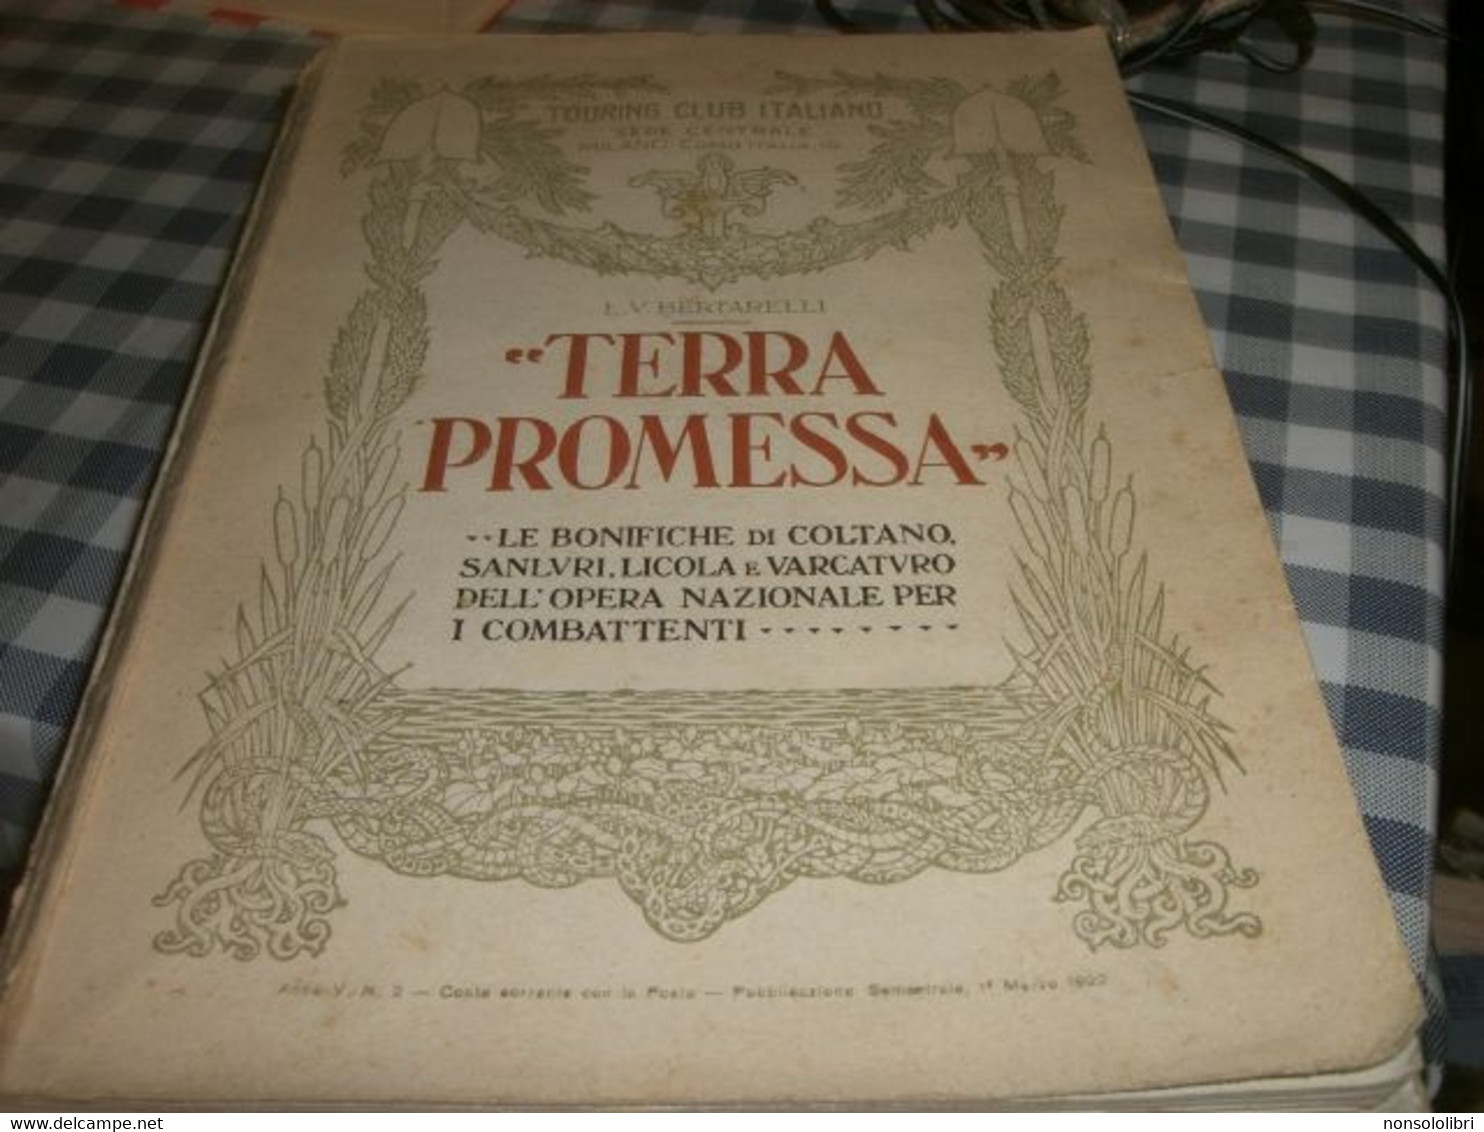 LIBRO TERRA PROMESSA -TOUTING CLUB ITALIANO -BERTARELLI - Maatschappij, Politiek, Economie